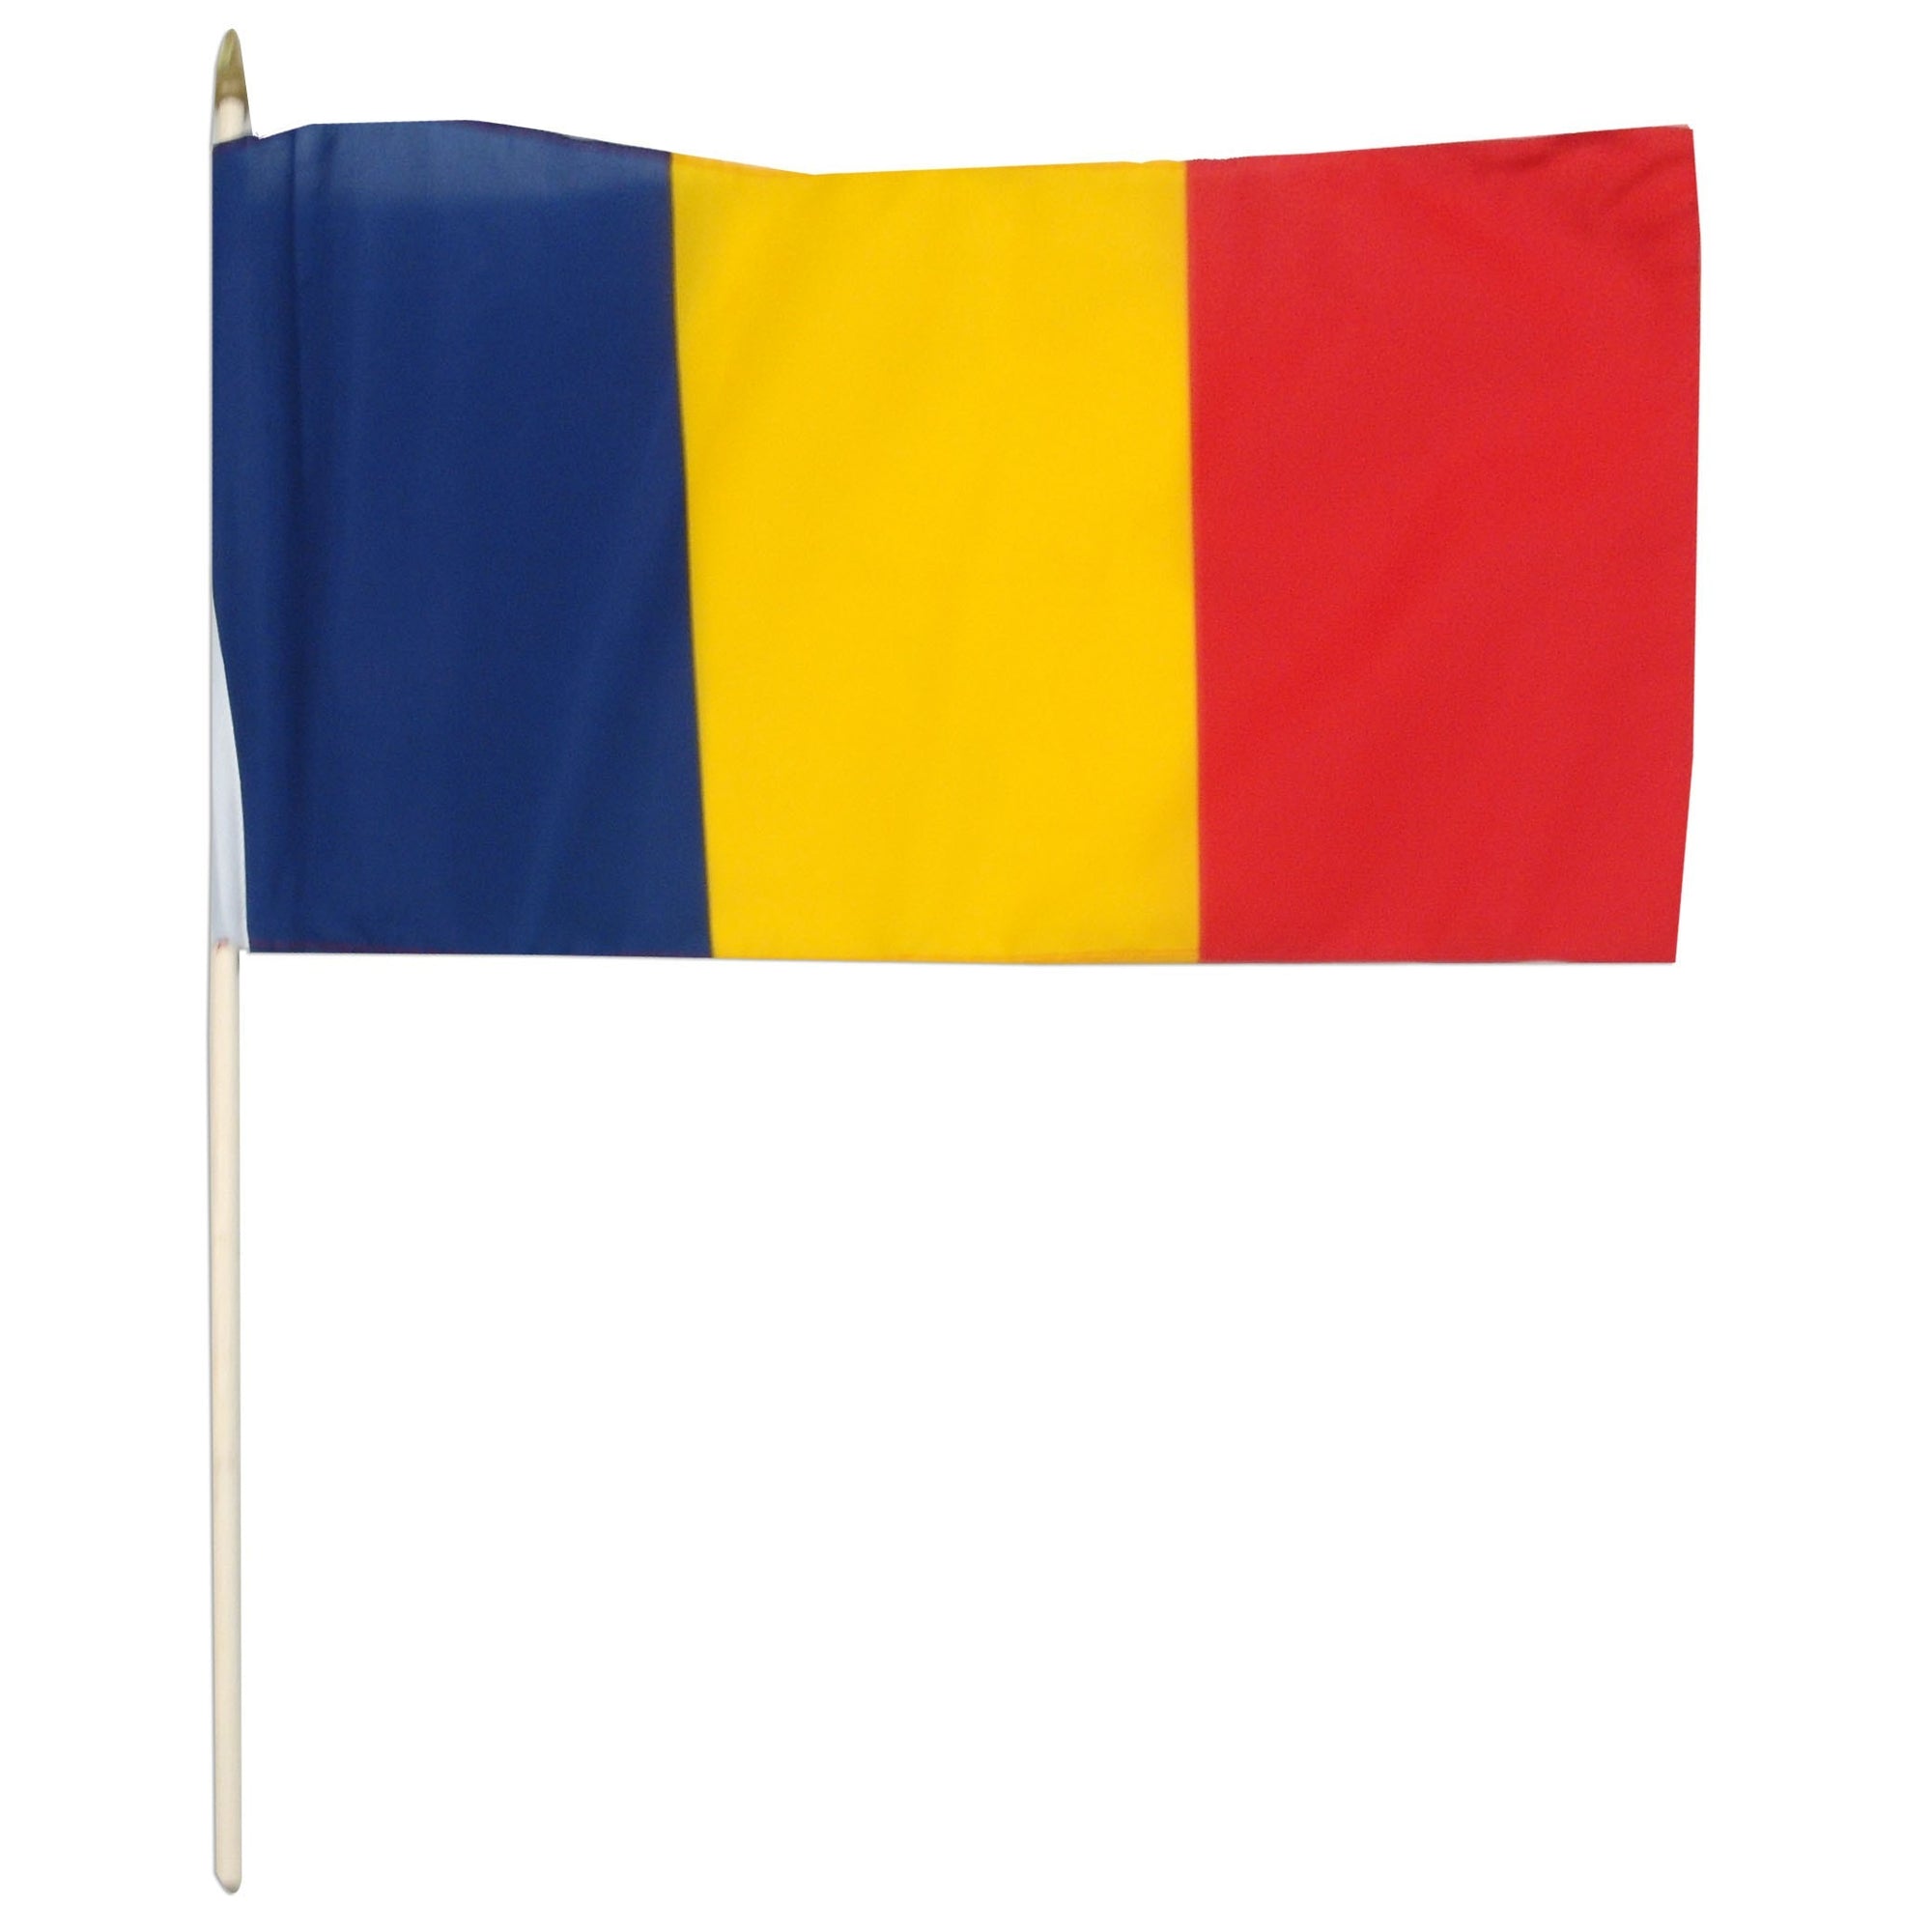 Chad 12" x 18" Mounted Flag